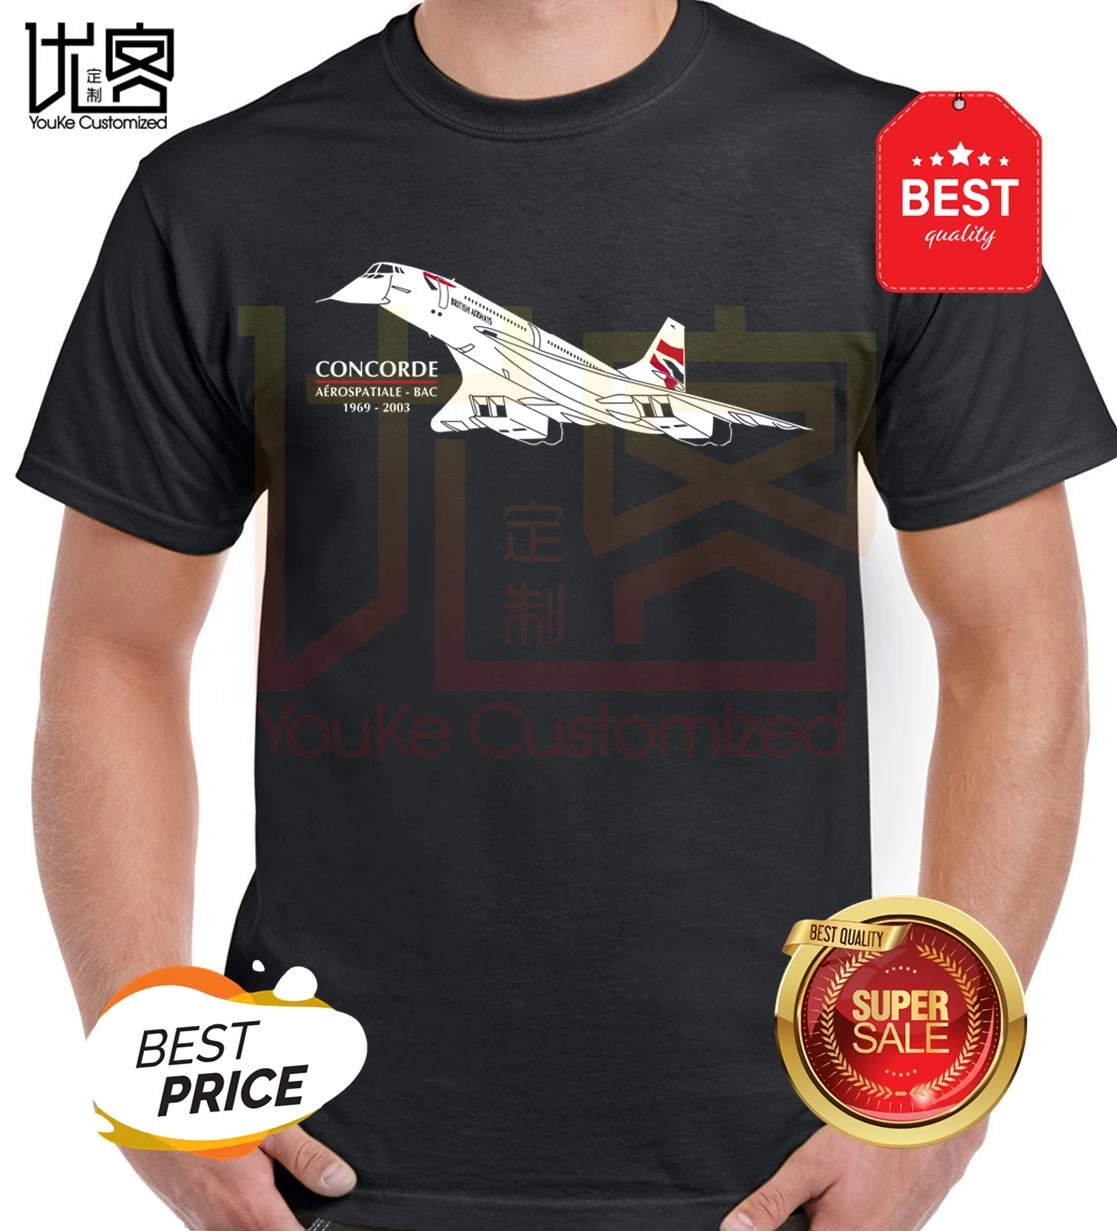 

2020 Hot Sale New Men'S T Shirt Cartoon Hip Hop Shirt Aeroclassic Aviation Heritage Concorde High Quality Men T Shirts